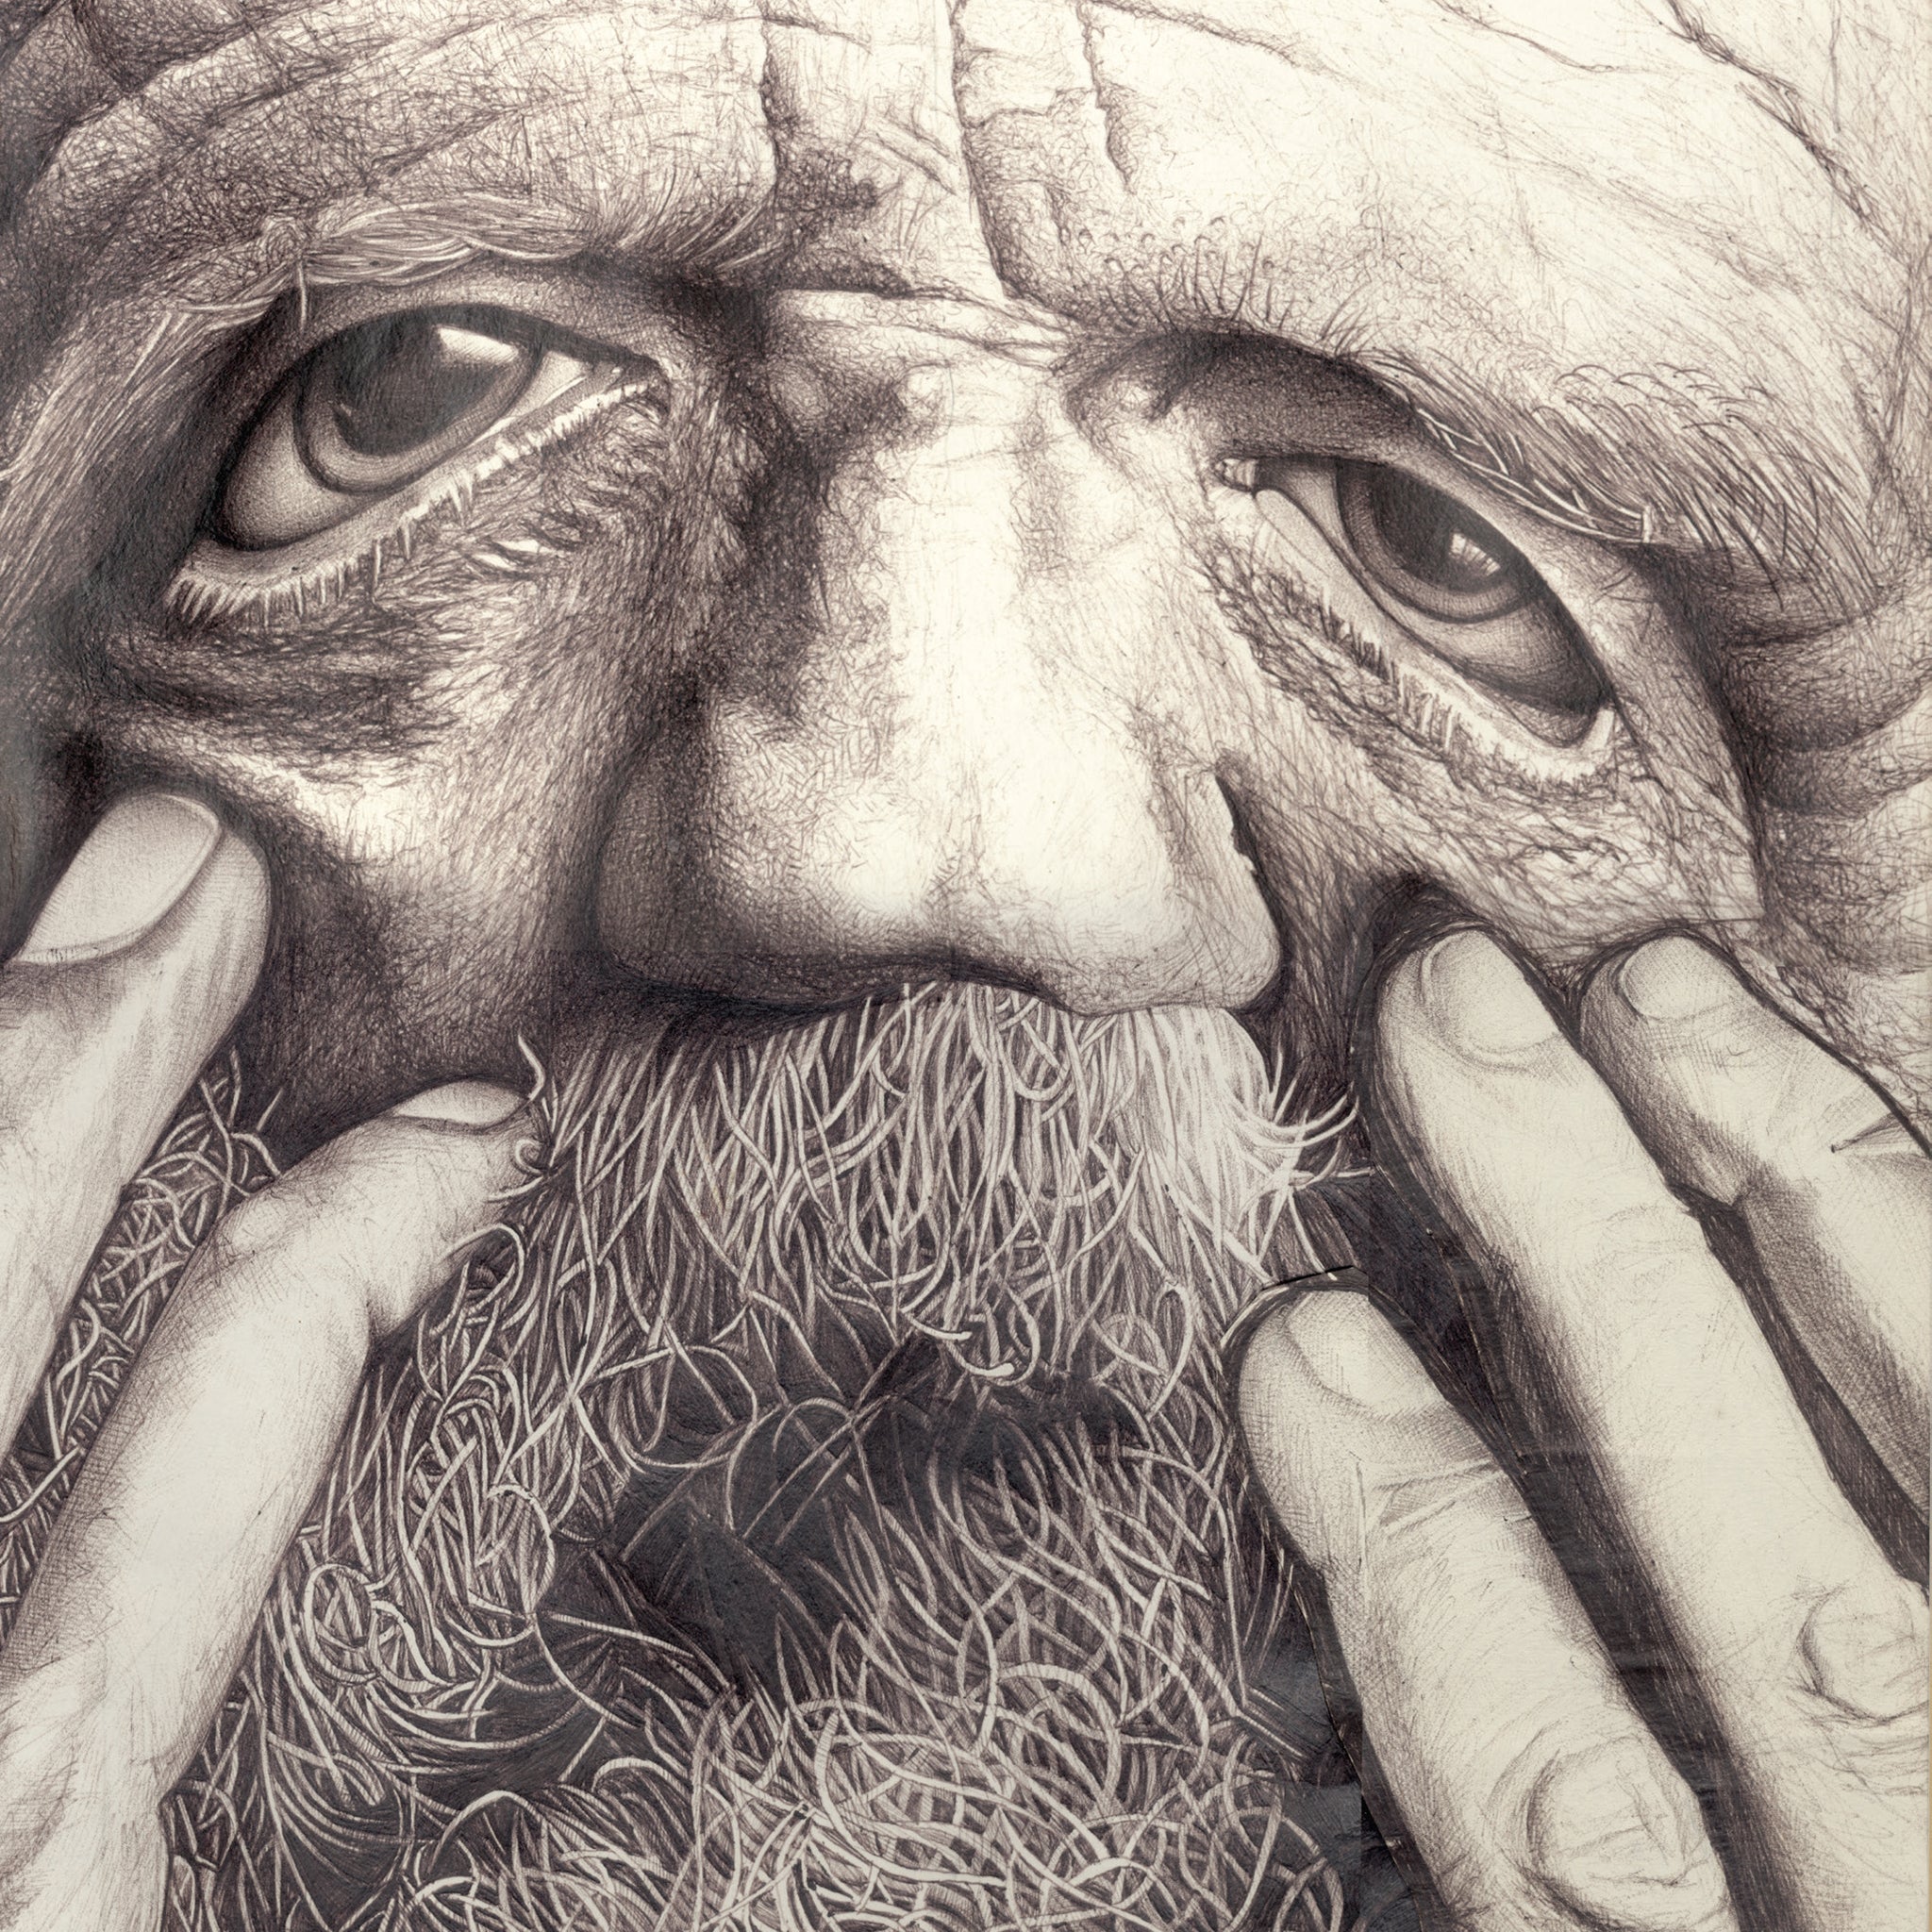 Biro - Beard
Art created by Debra Yates a graphic designer